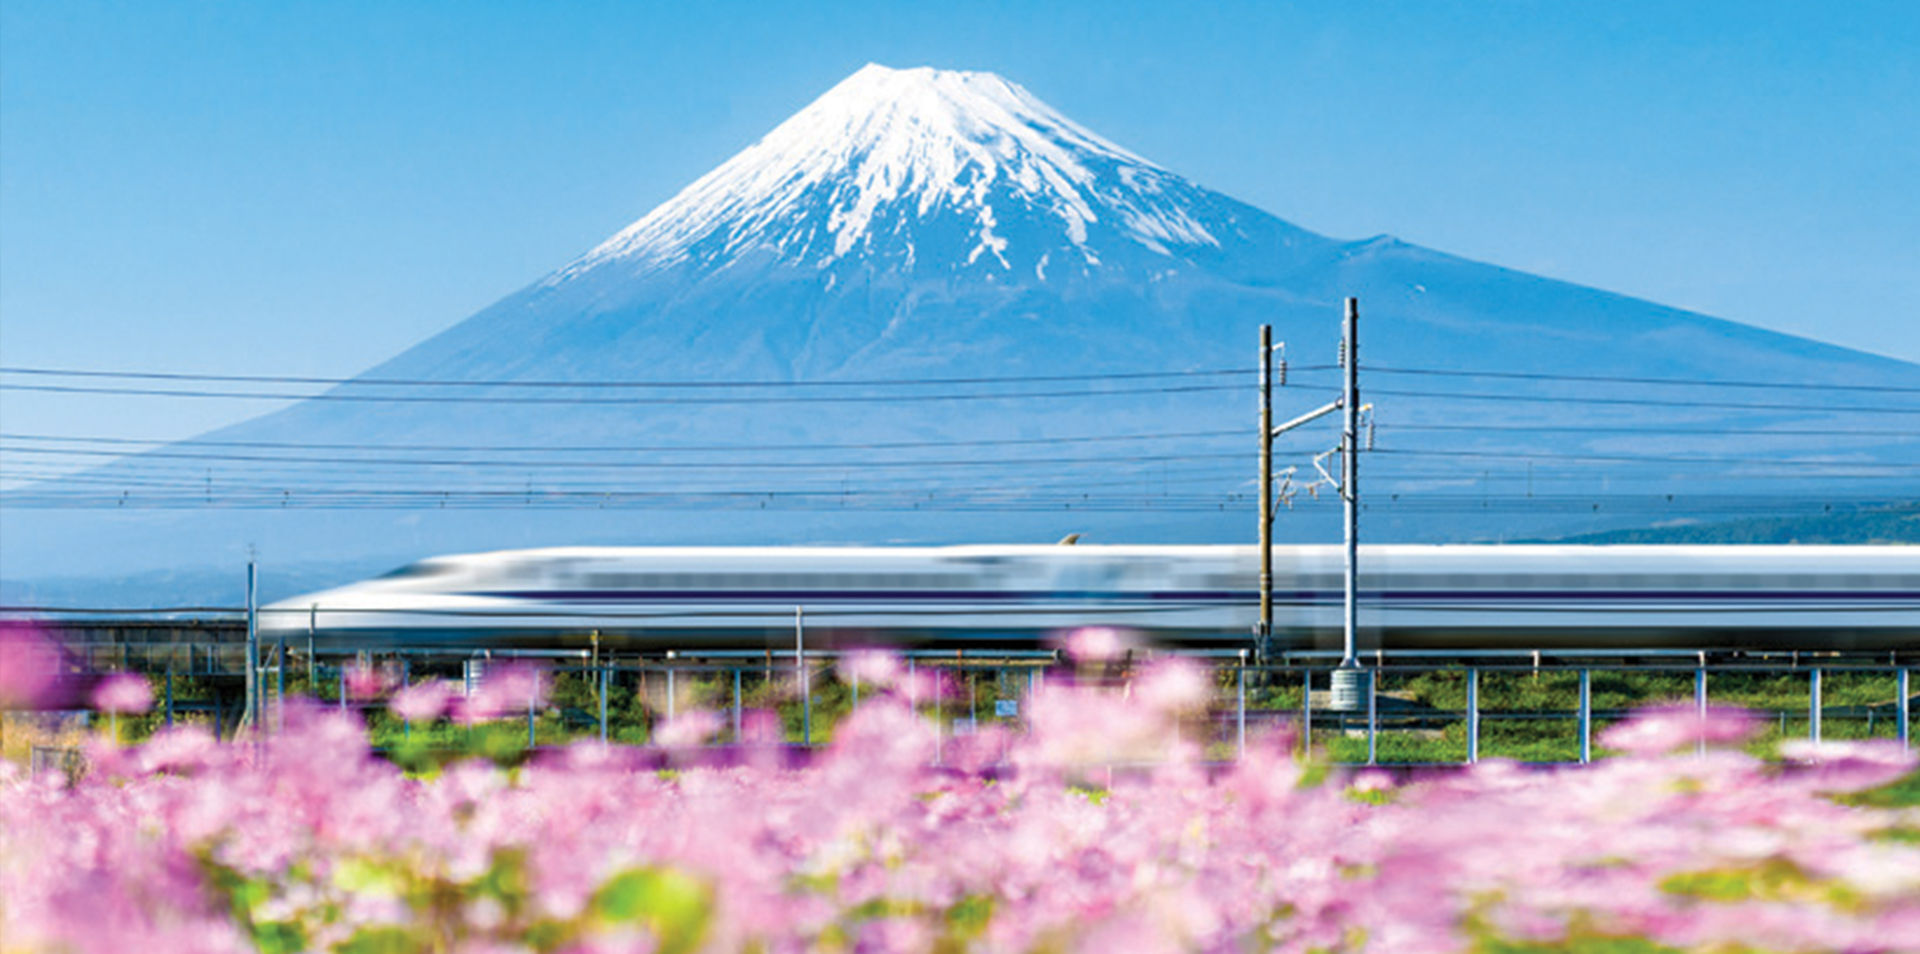 Japan by Rail